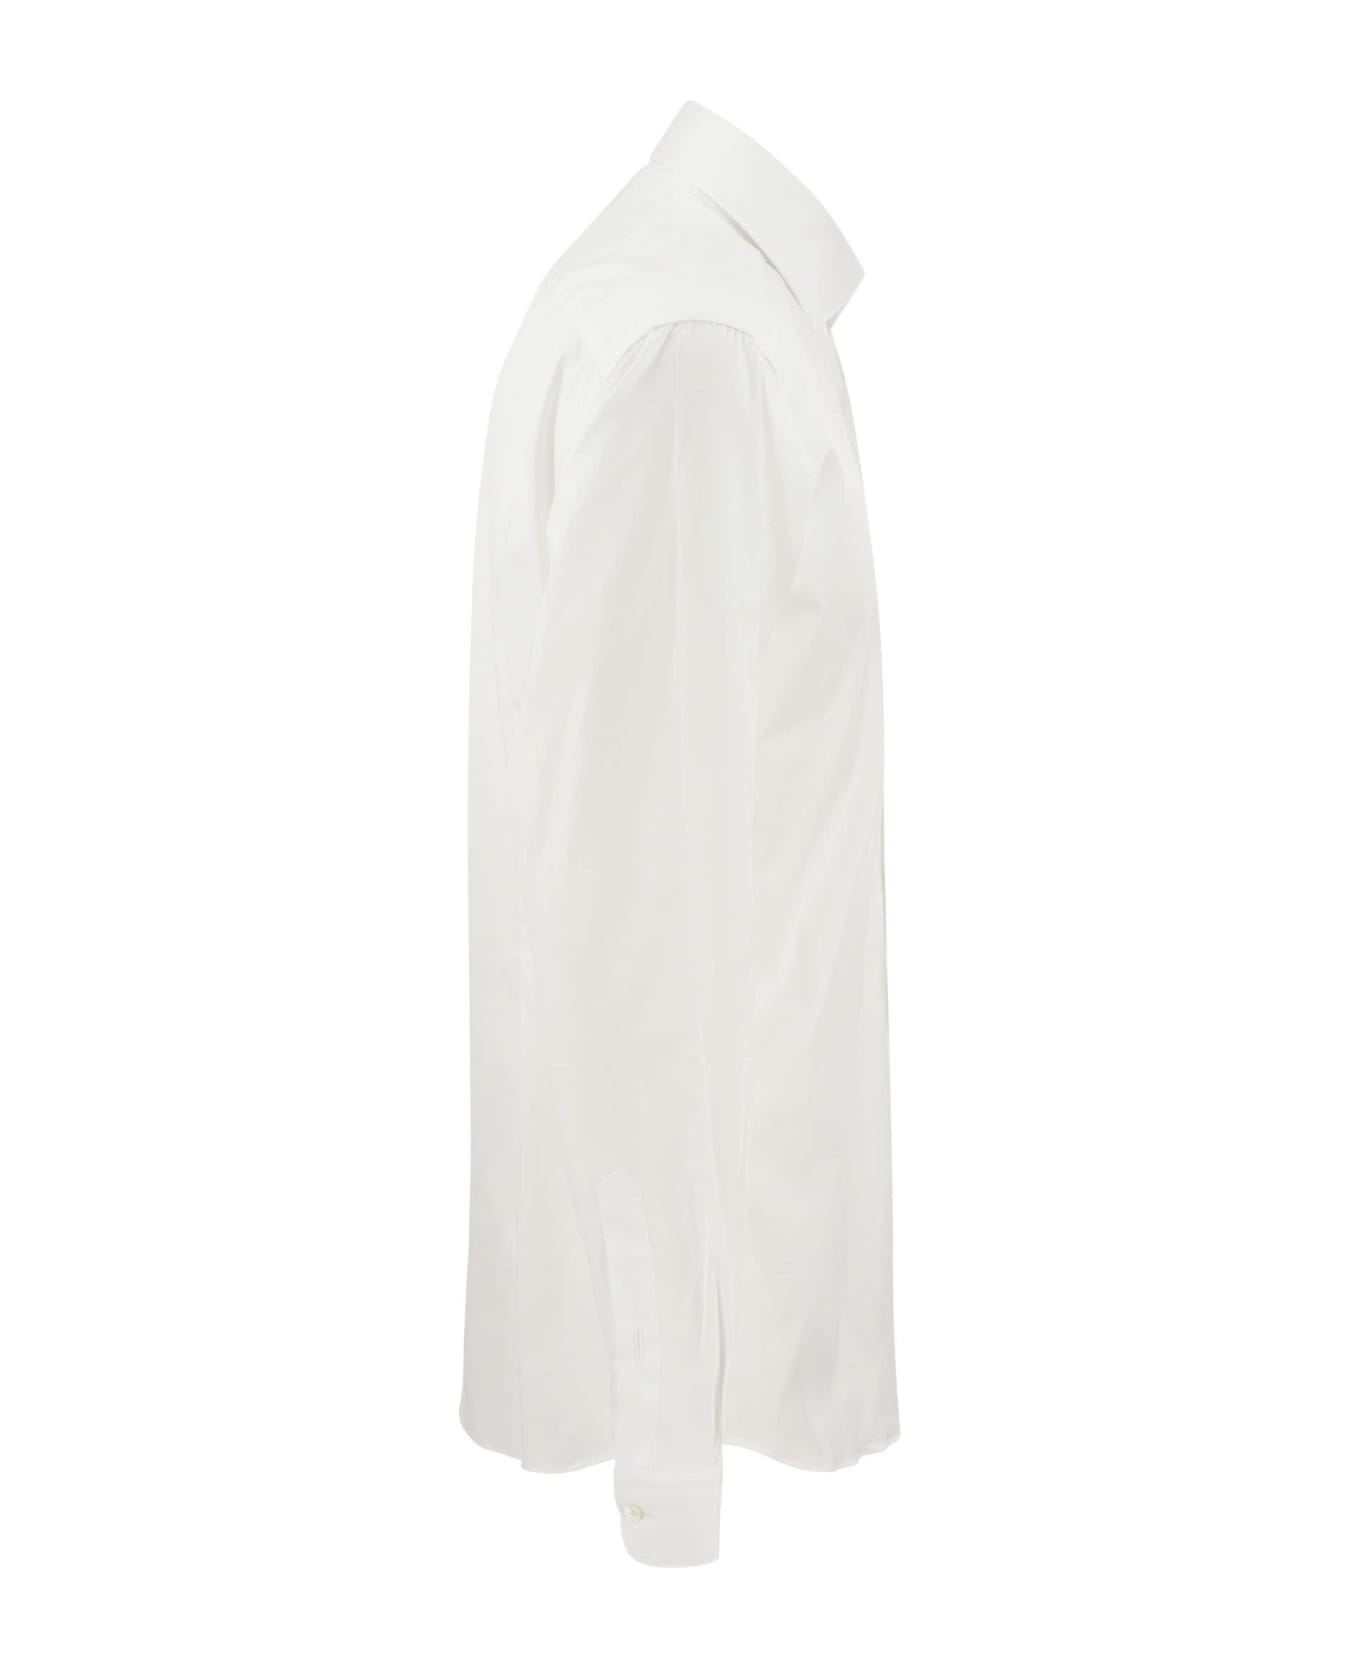 Fay Stretch French Collar Shirt - White シャツ